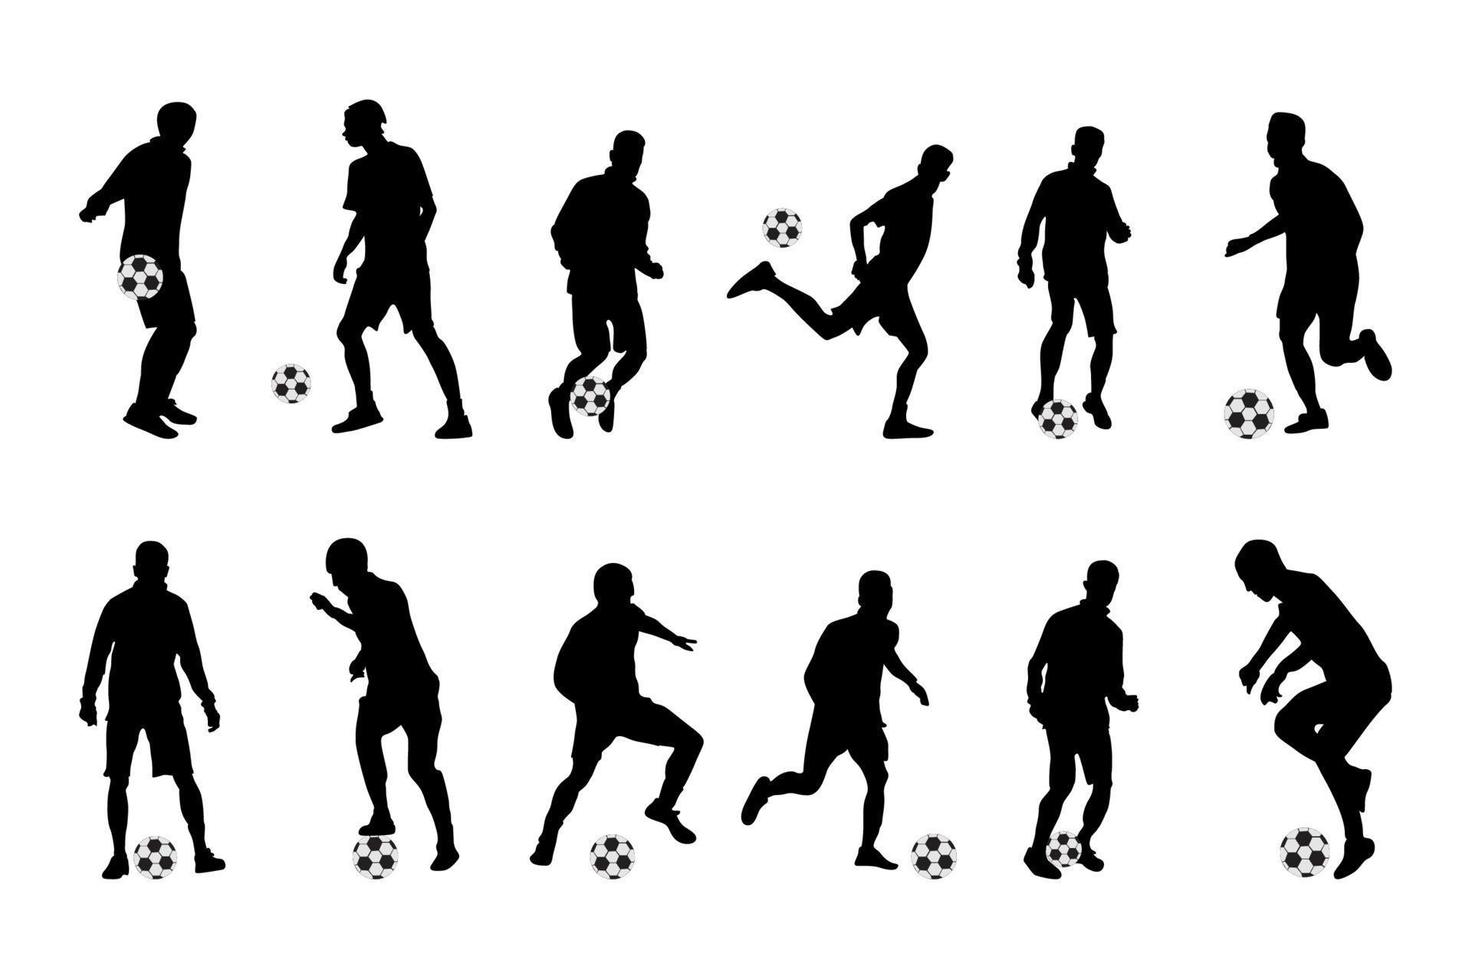 ensemble de football, joueurs de football, football, football, silhouette de joueurs vecteur